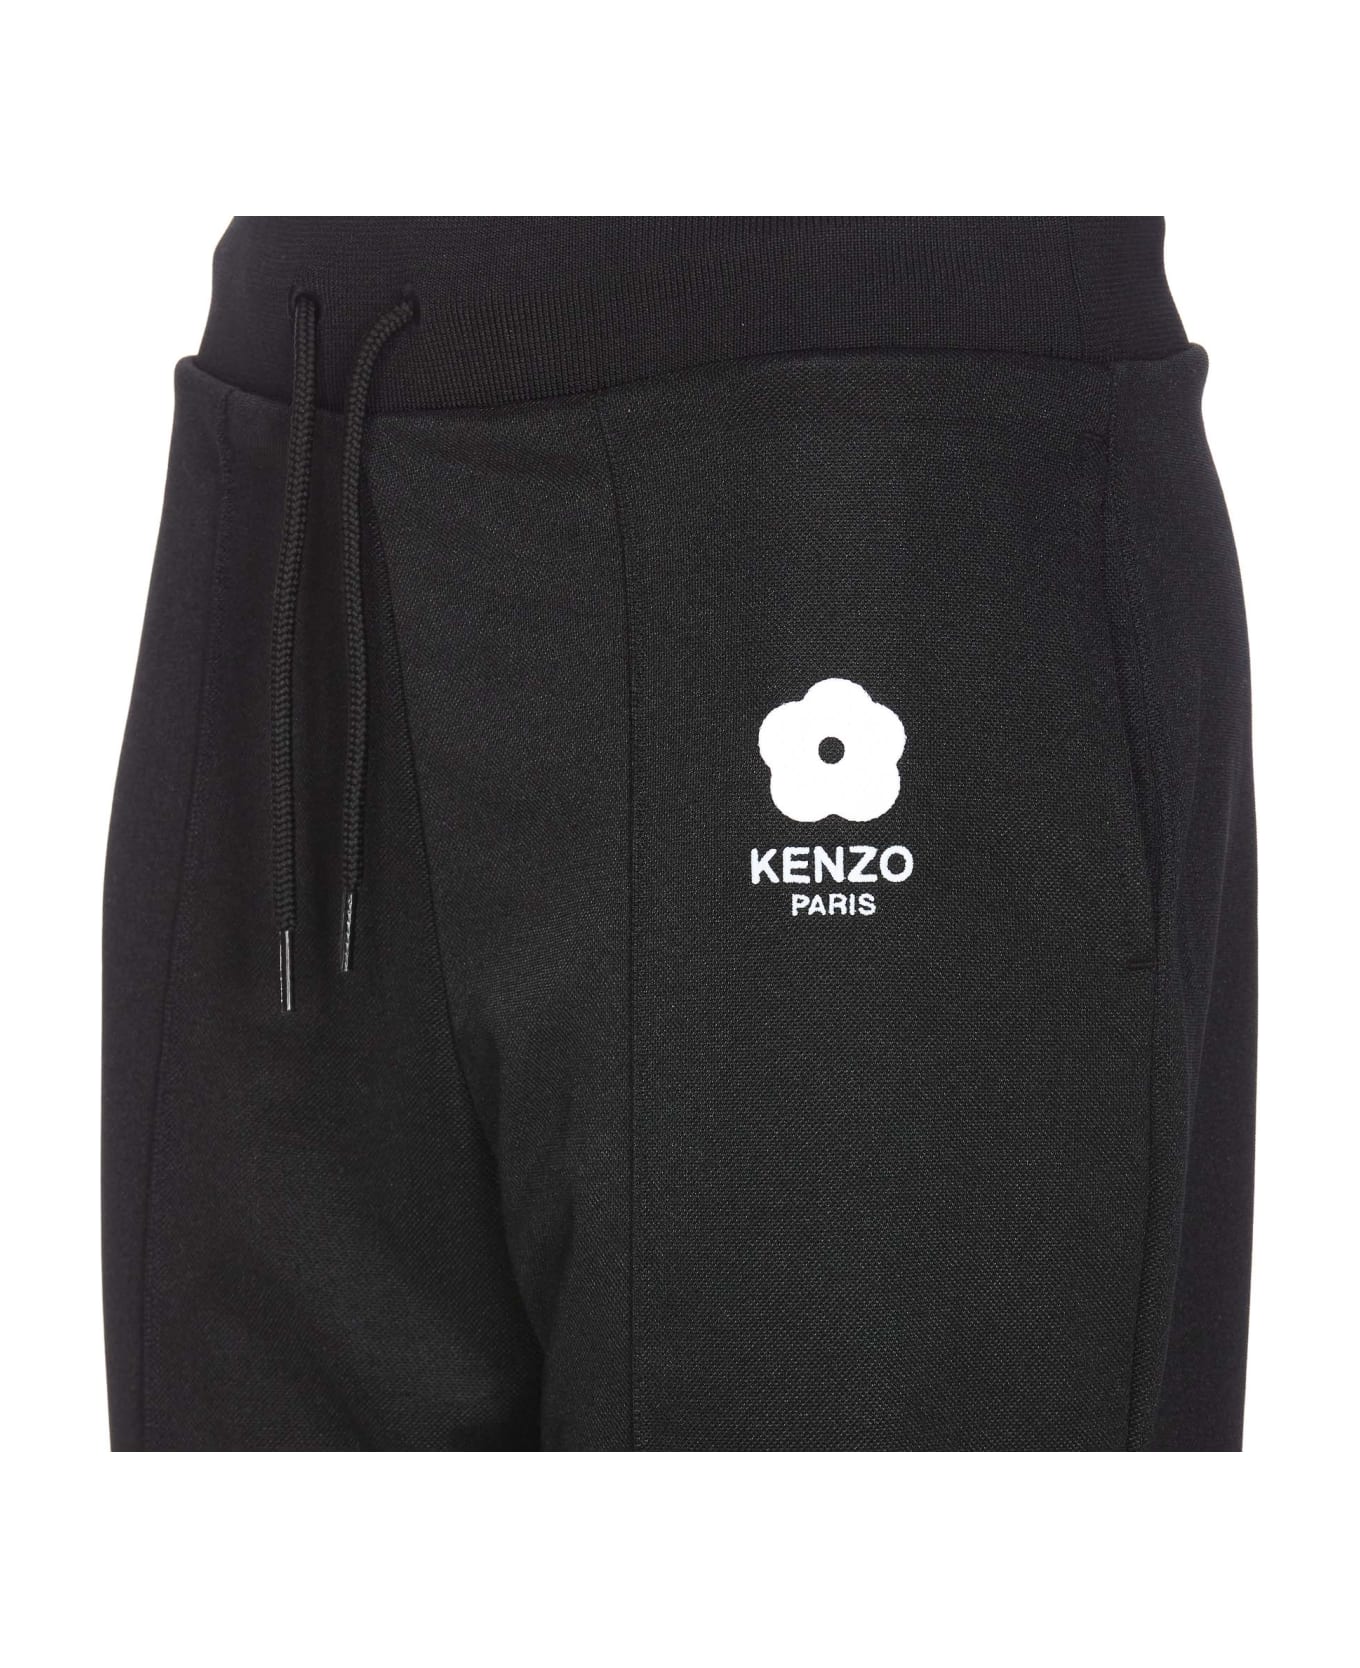 Kenzo Boke 2.0 Pants - Black